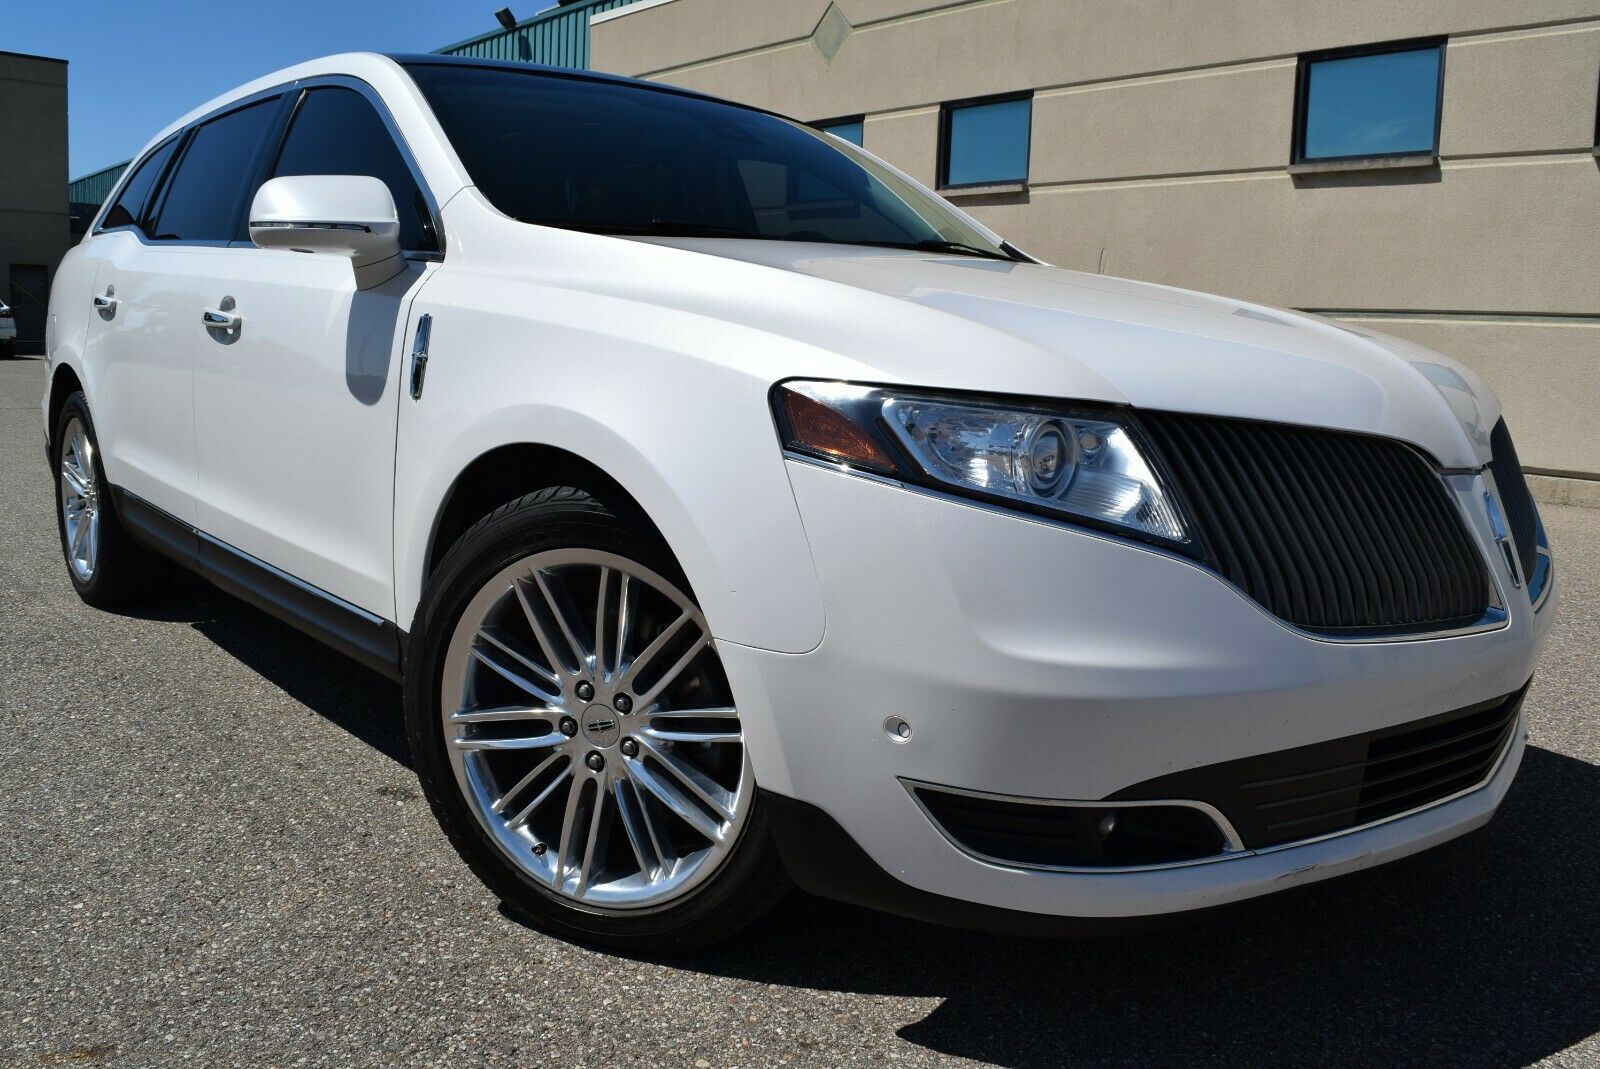 2014 Lincoln Mkt Awd Technology & Elite-edition(new Was $53,295) 2014 Lincoln Mkt Wagon Crossover 3.5l/v6/ecoboost/awd/pano/3-keys/navi/sensors